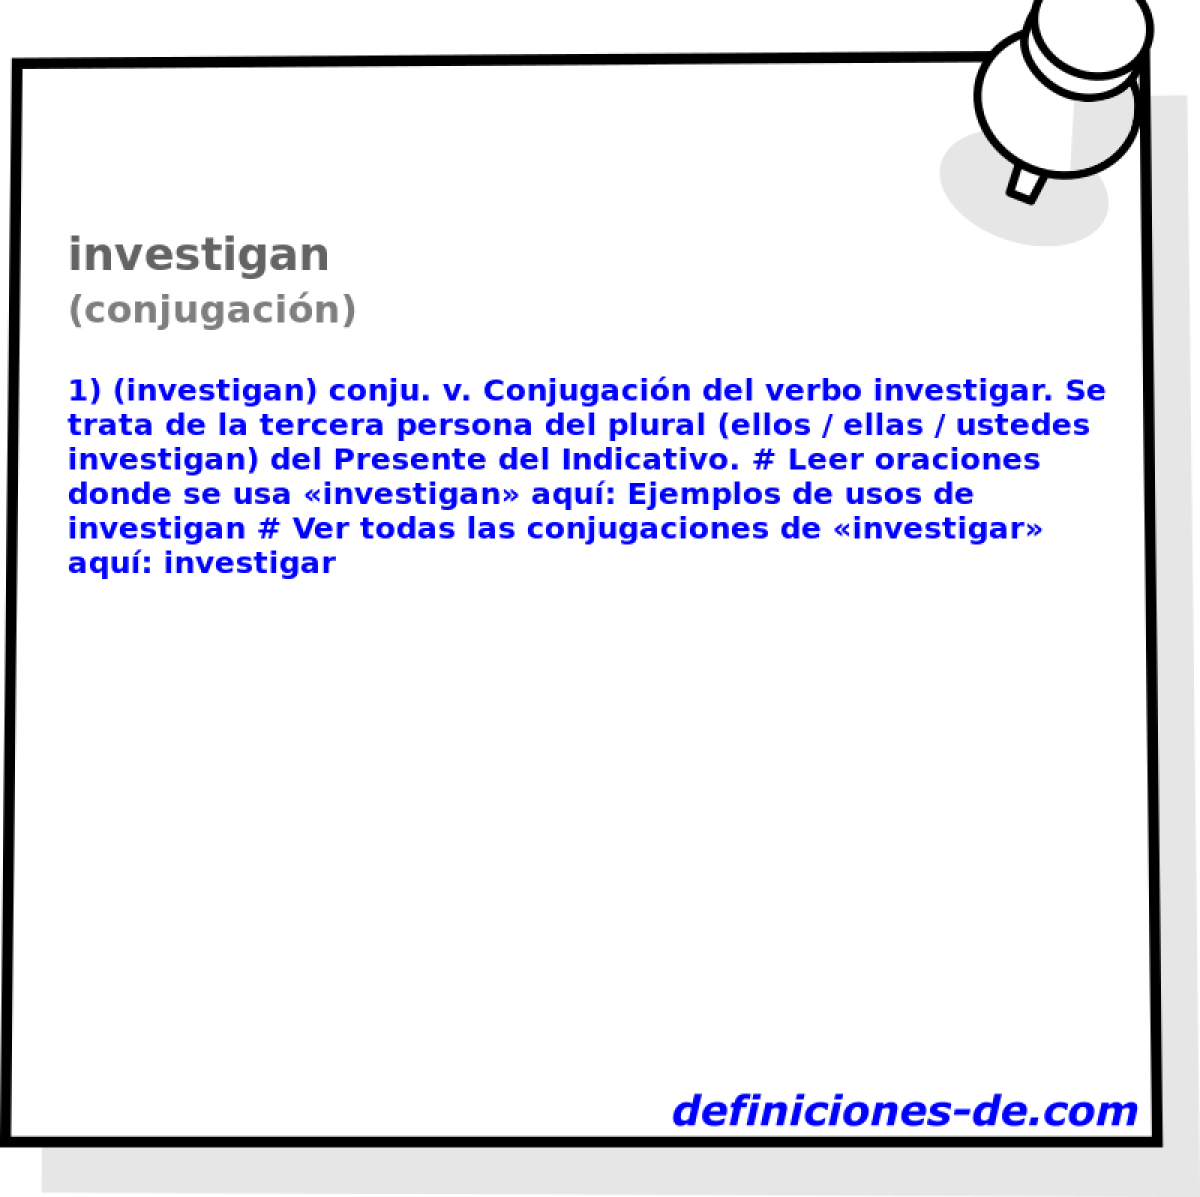 investigan (conjugacin)